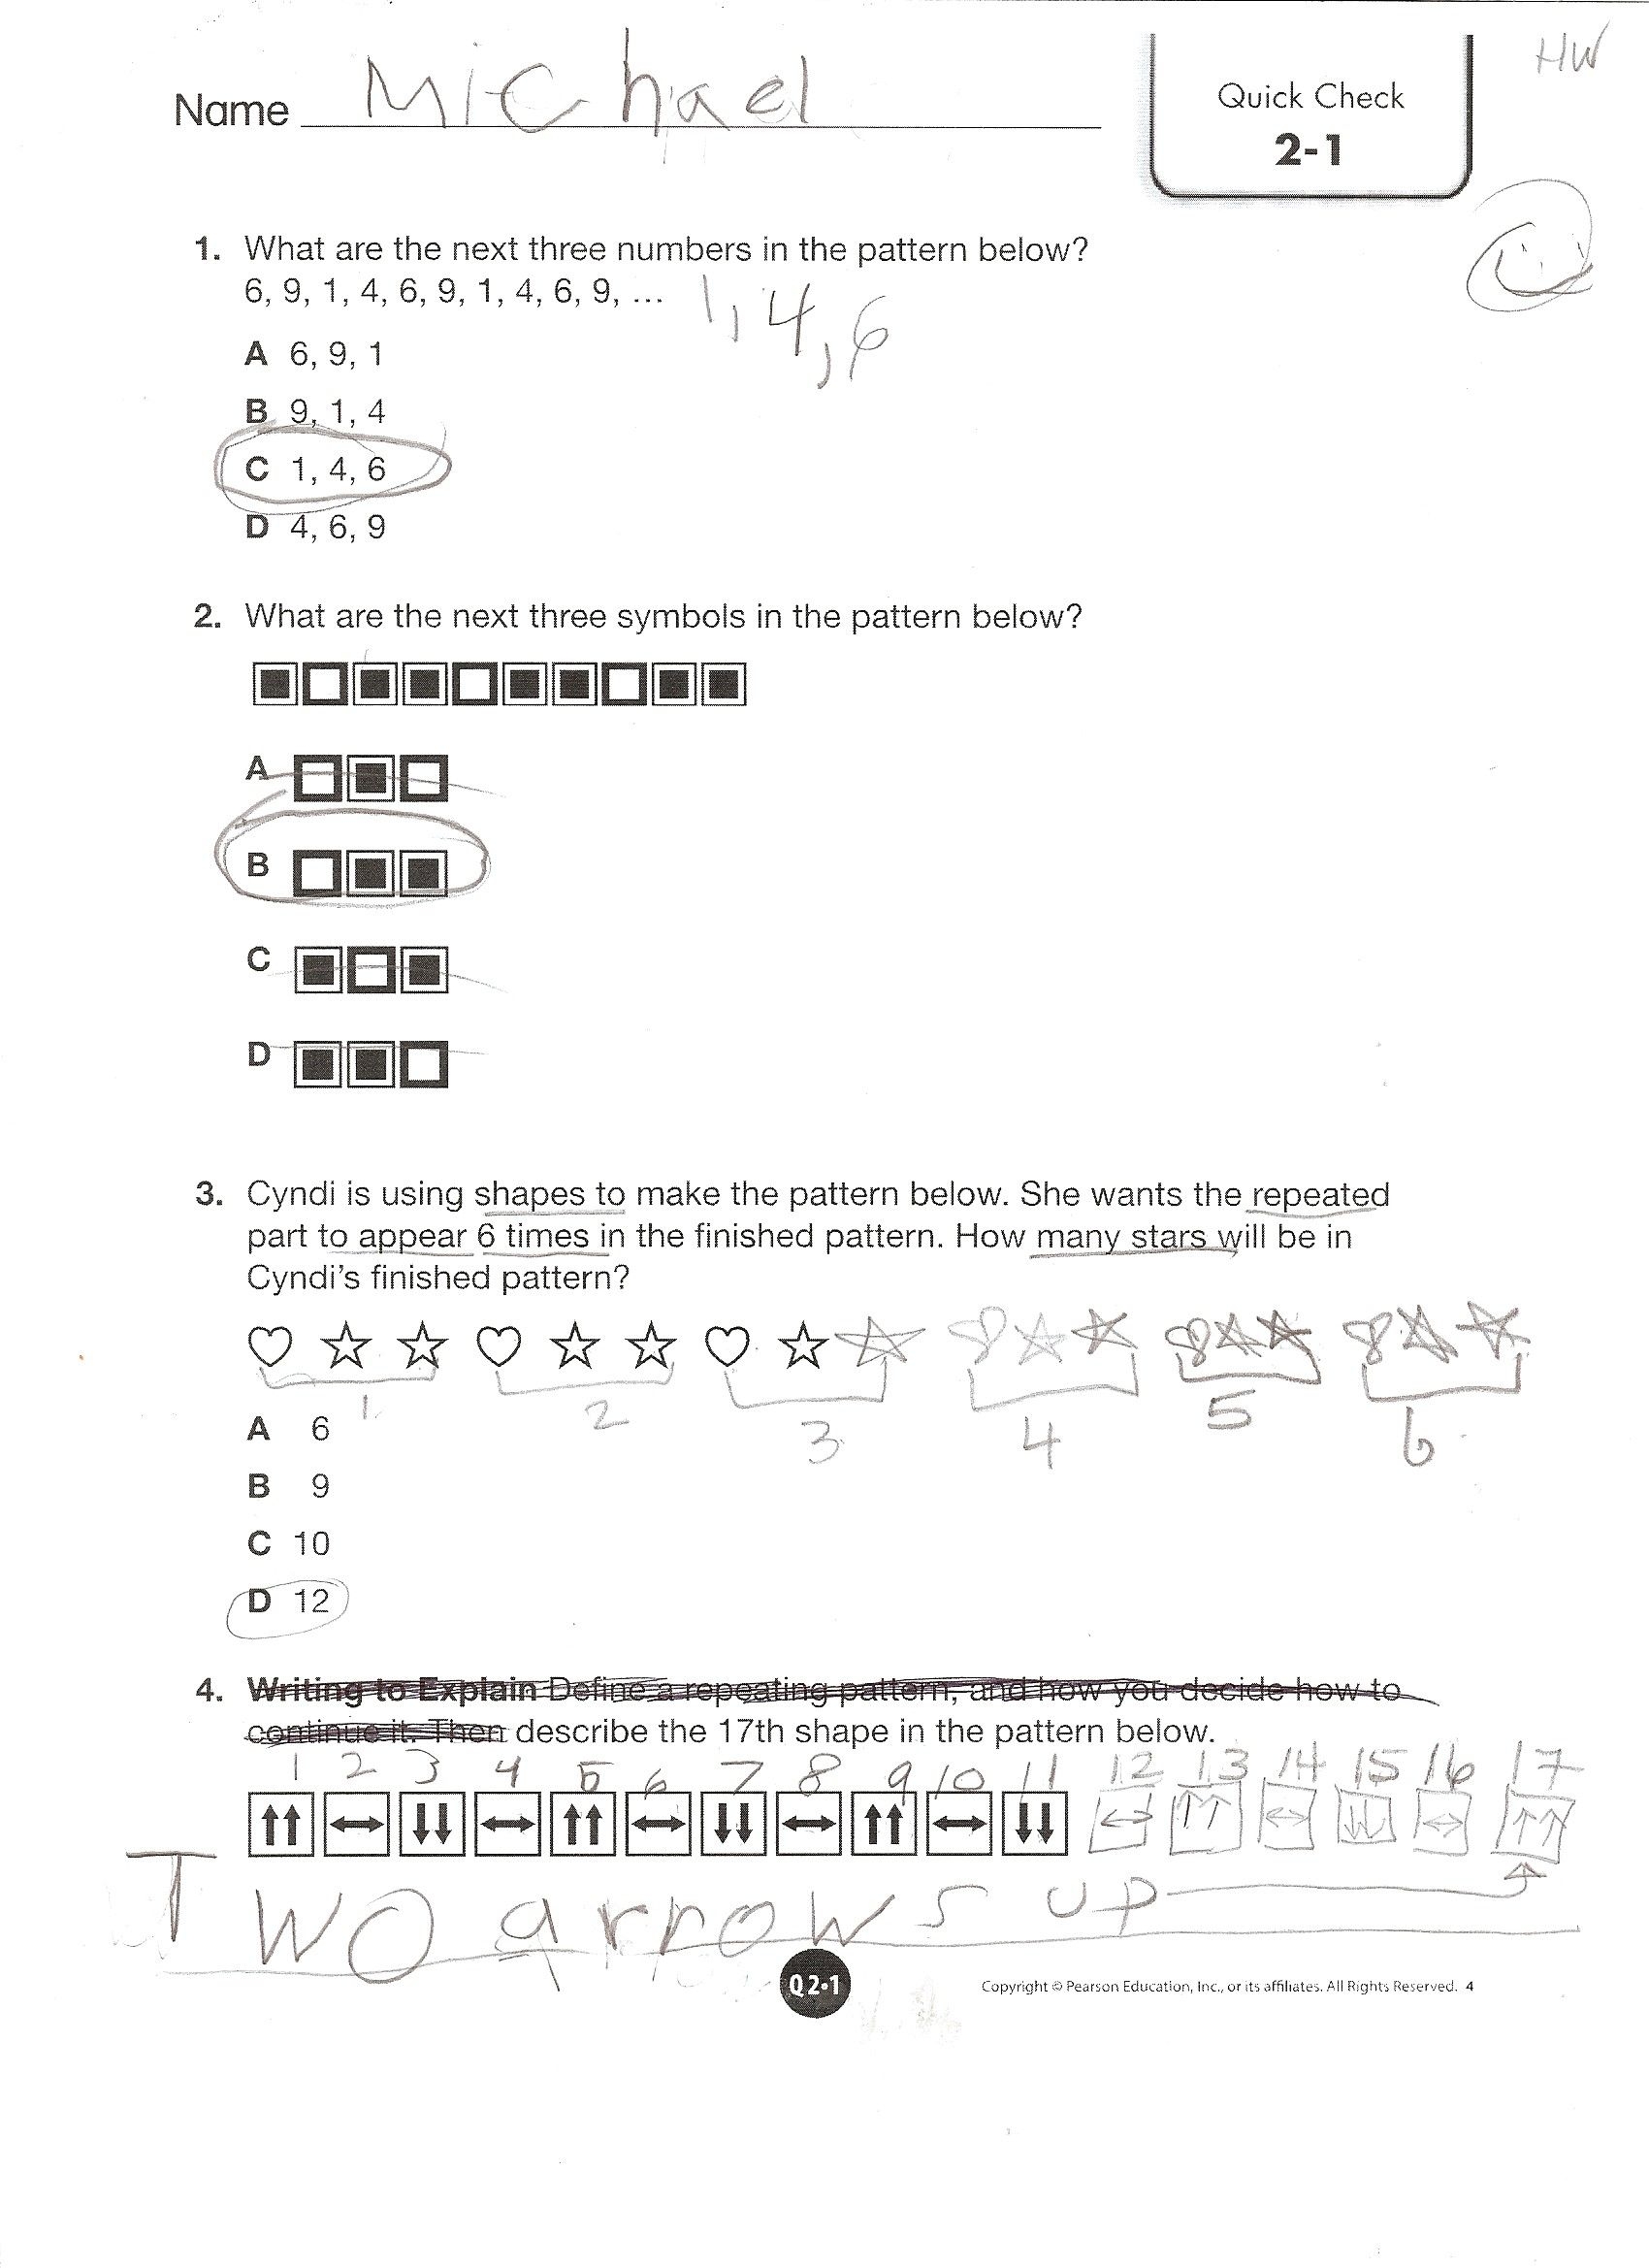 envision-math-grade-4-topic-2-1-quick-check-envision-math-kindergarten-math-worksheets-math